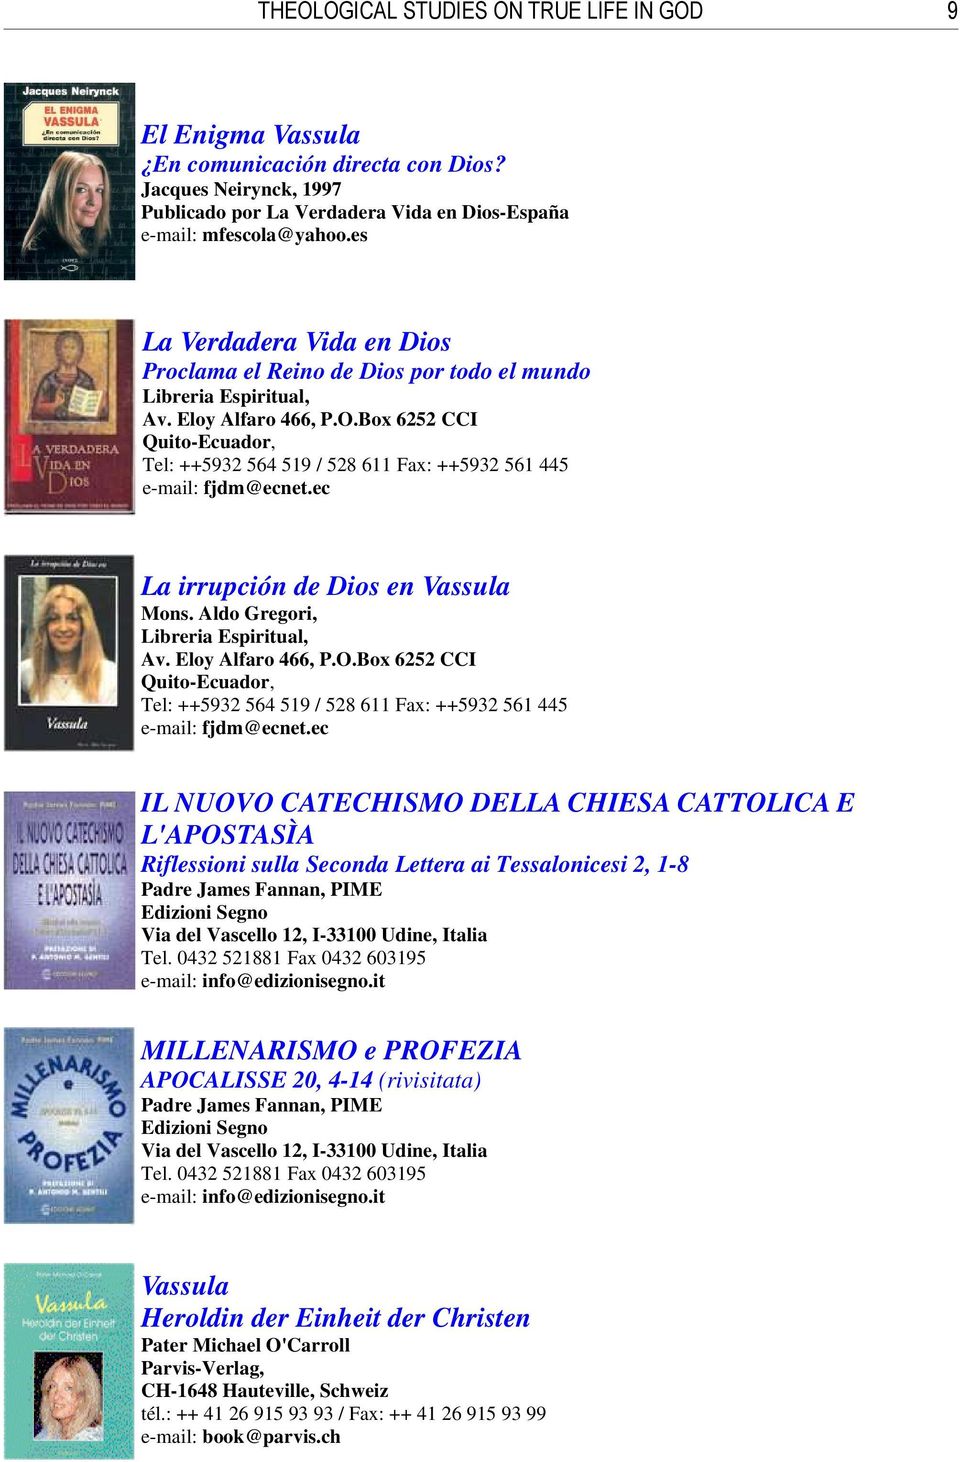 Box 6252 CCI Quito-Ecuador, Tel: ++5932 564 519 / 528 611 Fax: ++5932 561 445 e-mail: fjdm@ecnet.ec La irrupción de Dios en Vassula Mons. Aldo Gregori, Libreria Espiritual, Av. Eloy Alfaro 466, P.O.